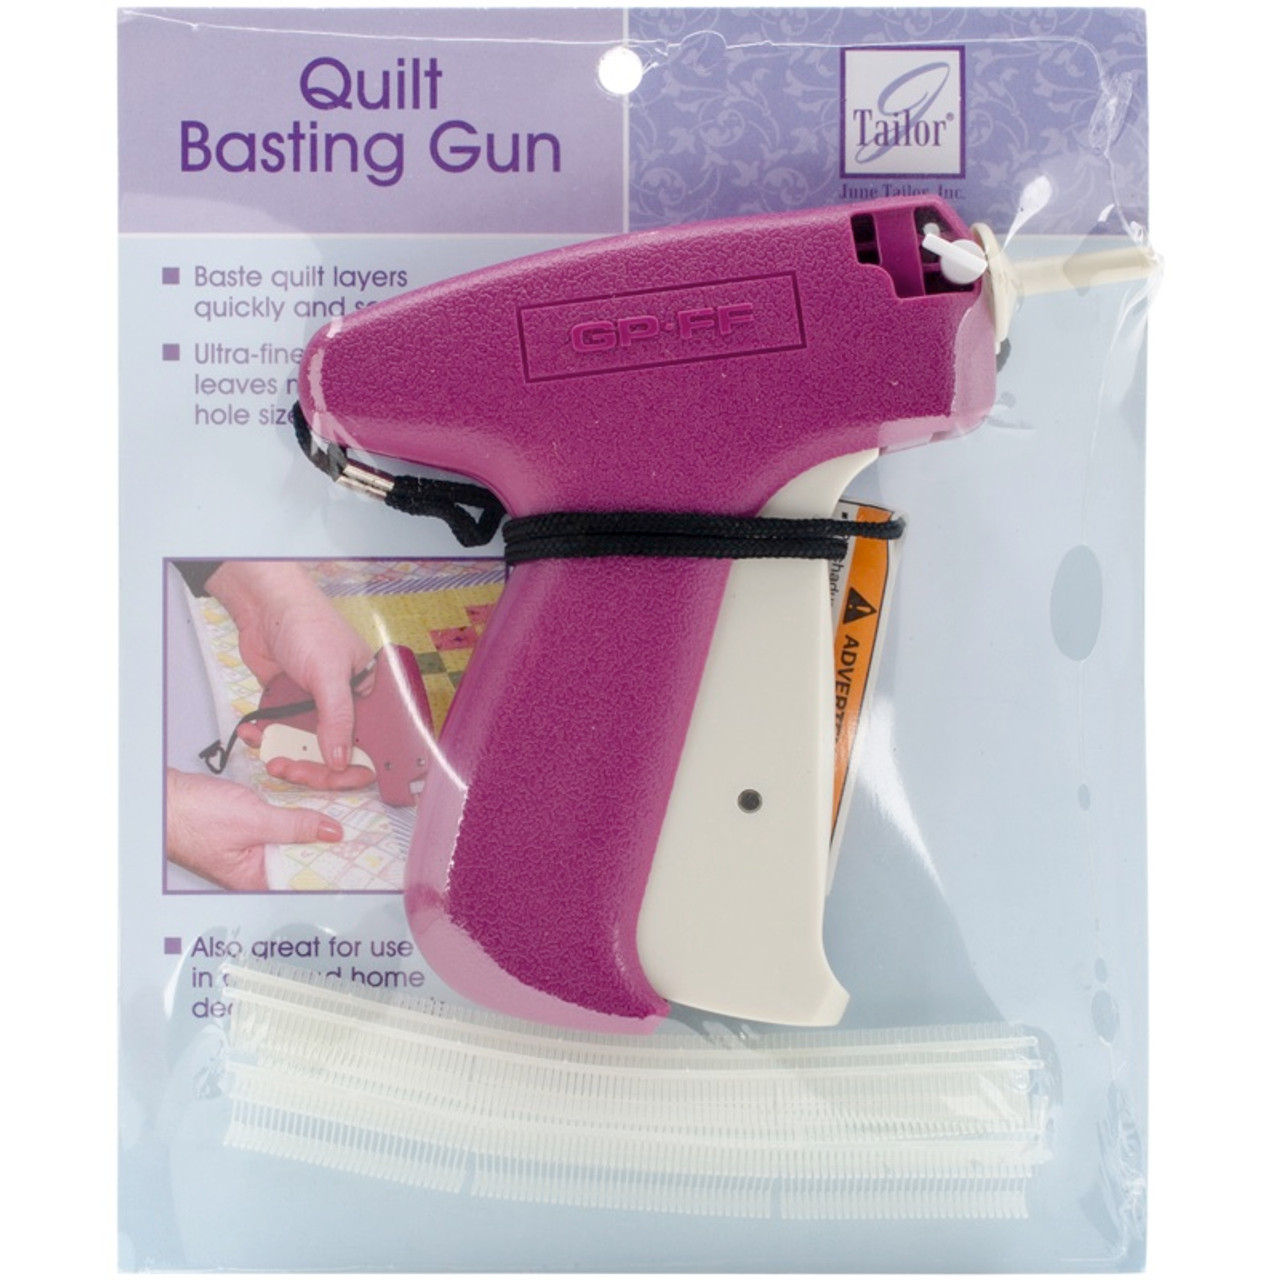 June Tailor Adhesive Quilt Basting Spray - 730976044004 Quilting